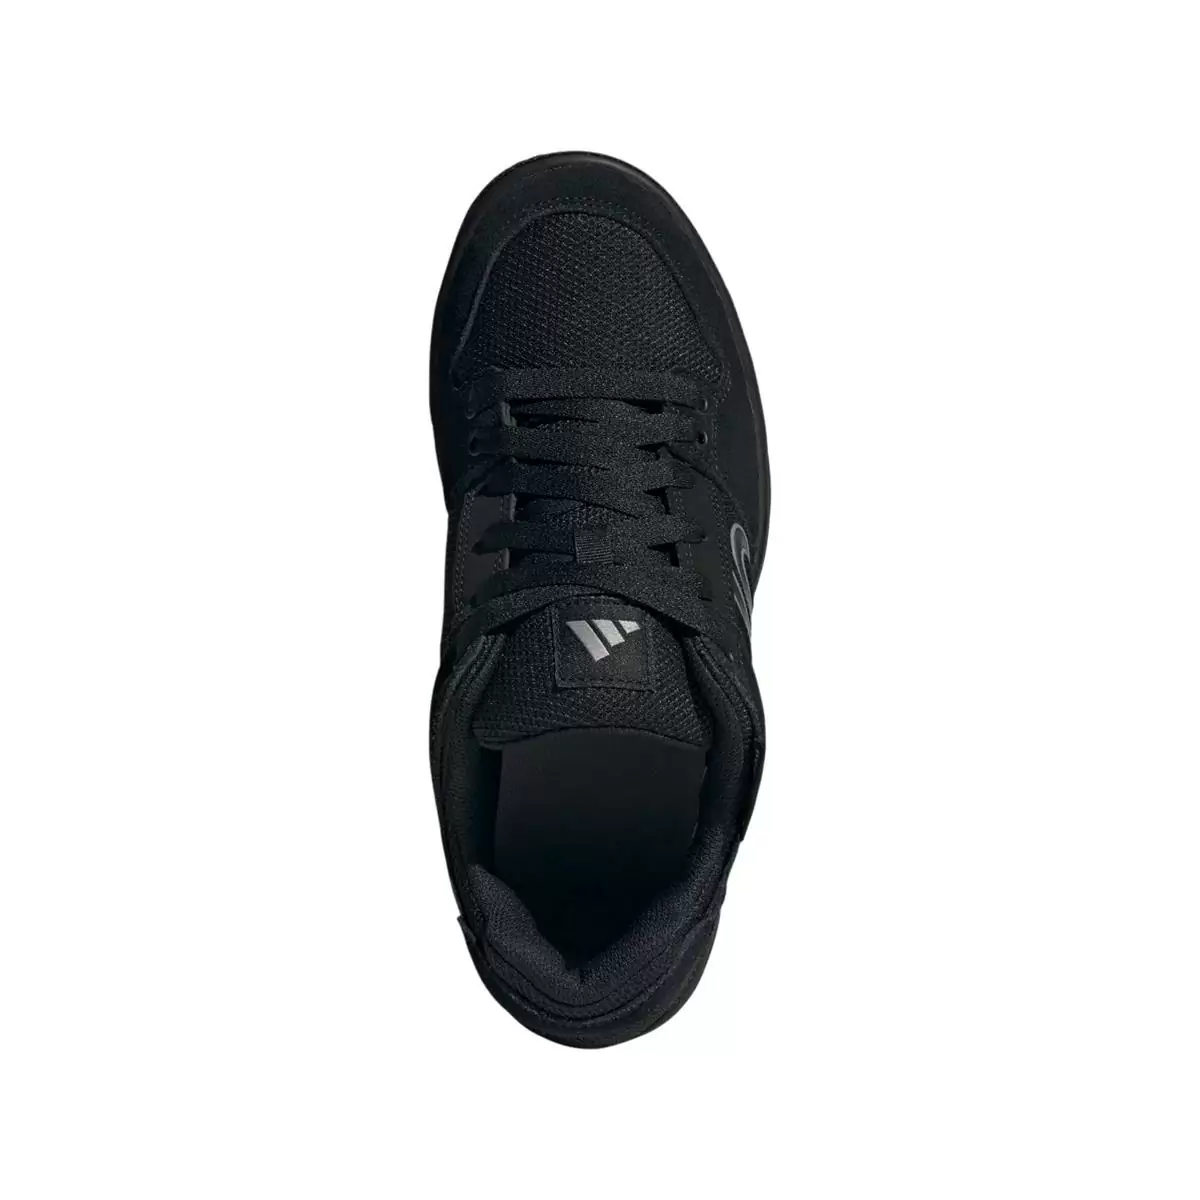 MTB Shoes Flat Freerider Black Size 45 #1